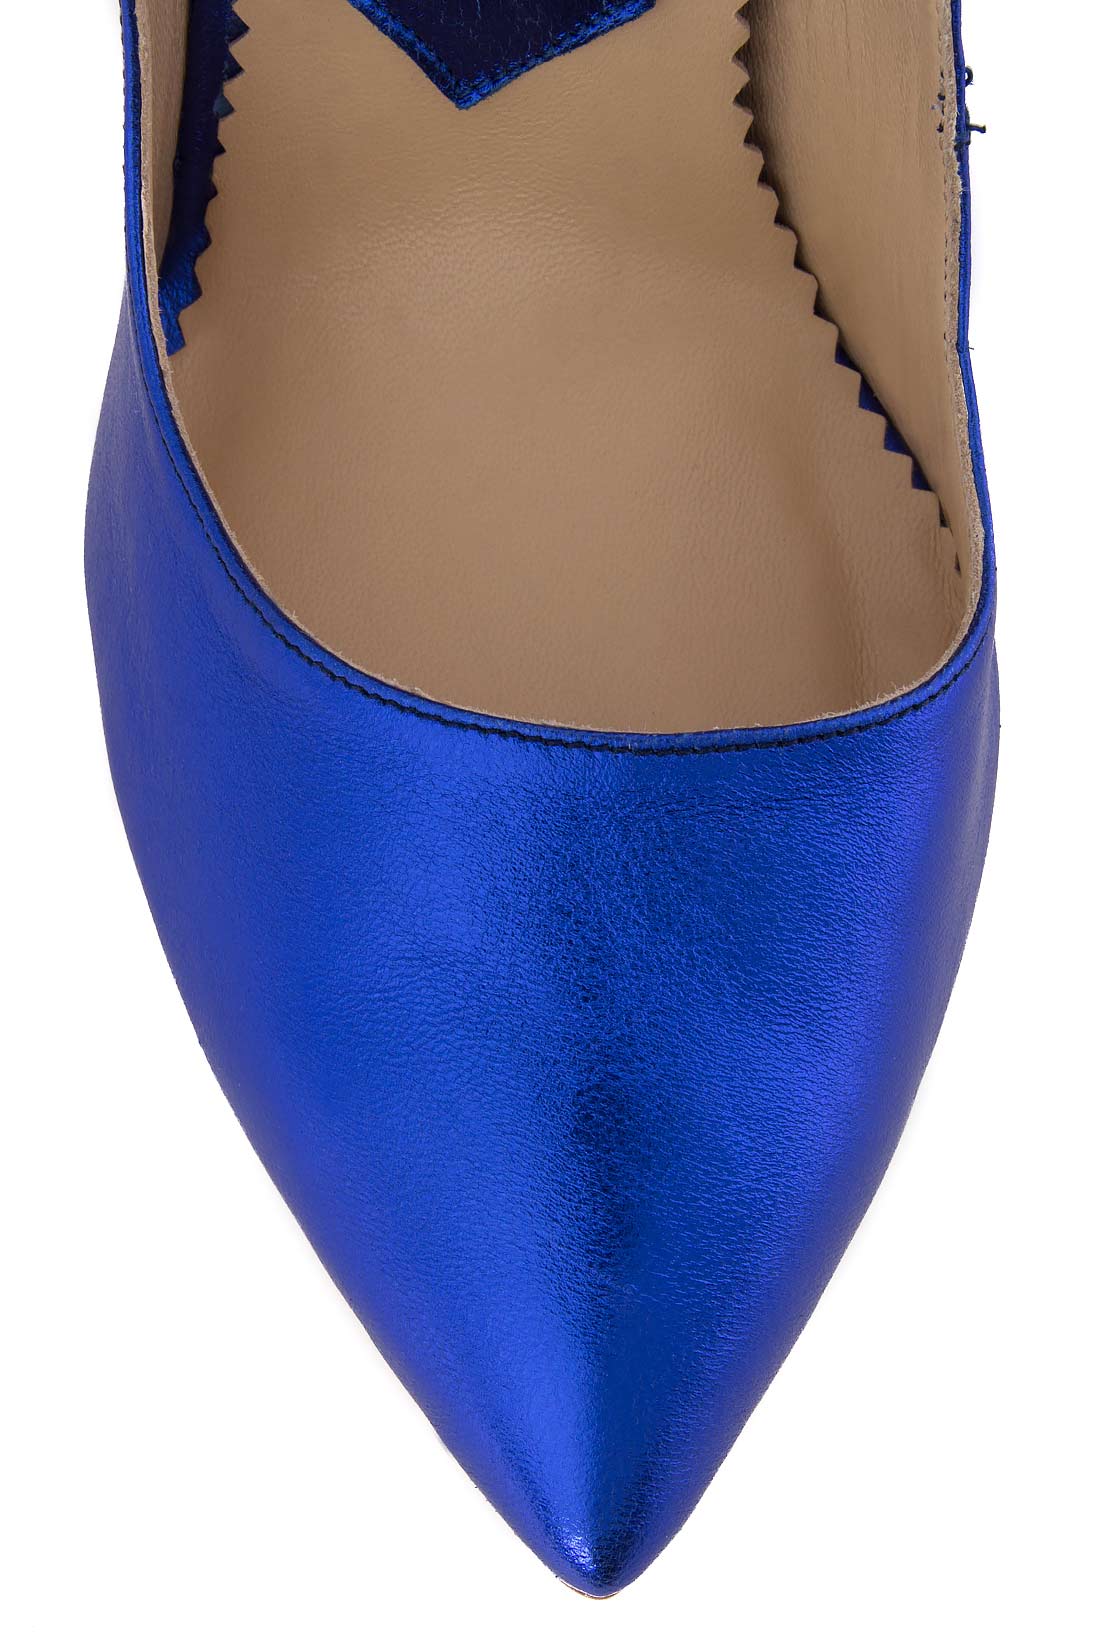 Pantofi stiletto albastru metalizat MIHAI ALBU SECOND HAND imagine 2